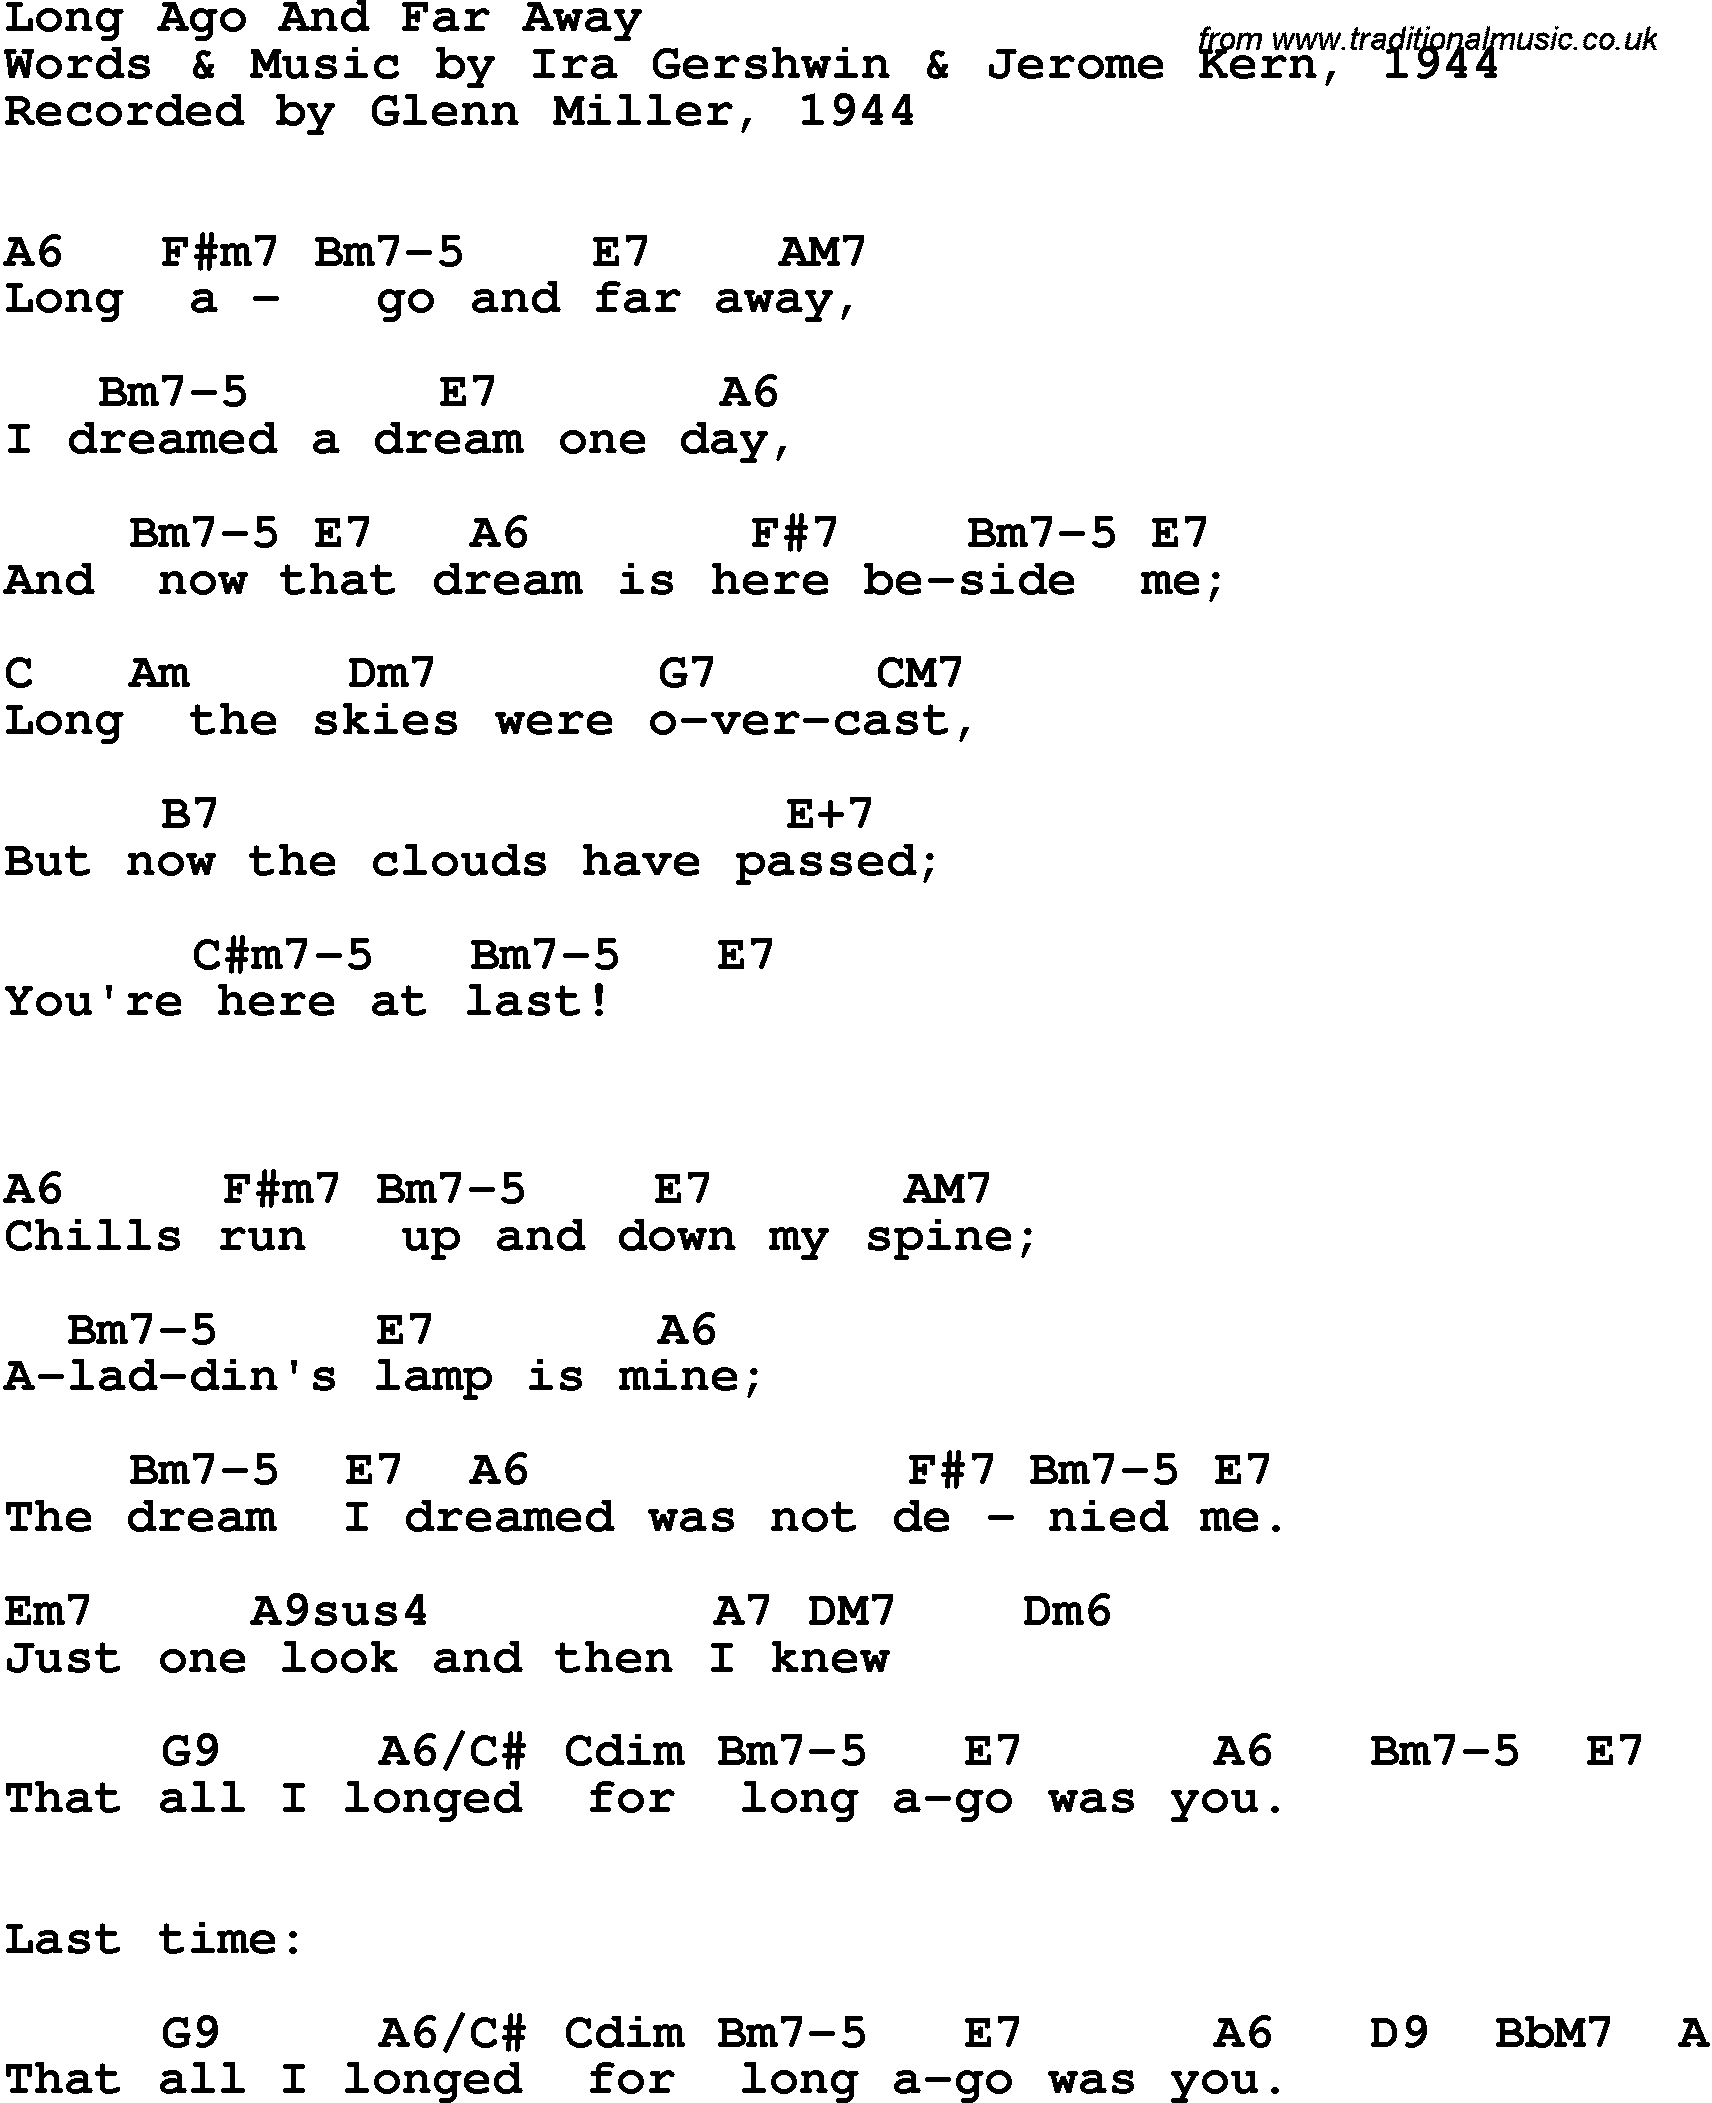 Song Lyrics with guitar chords for Long Ago And Far Away - Glenn Miller, 1944